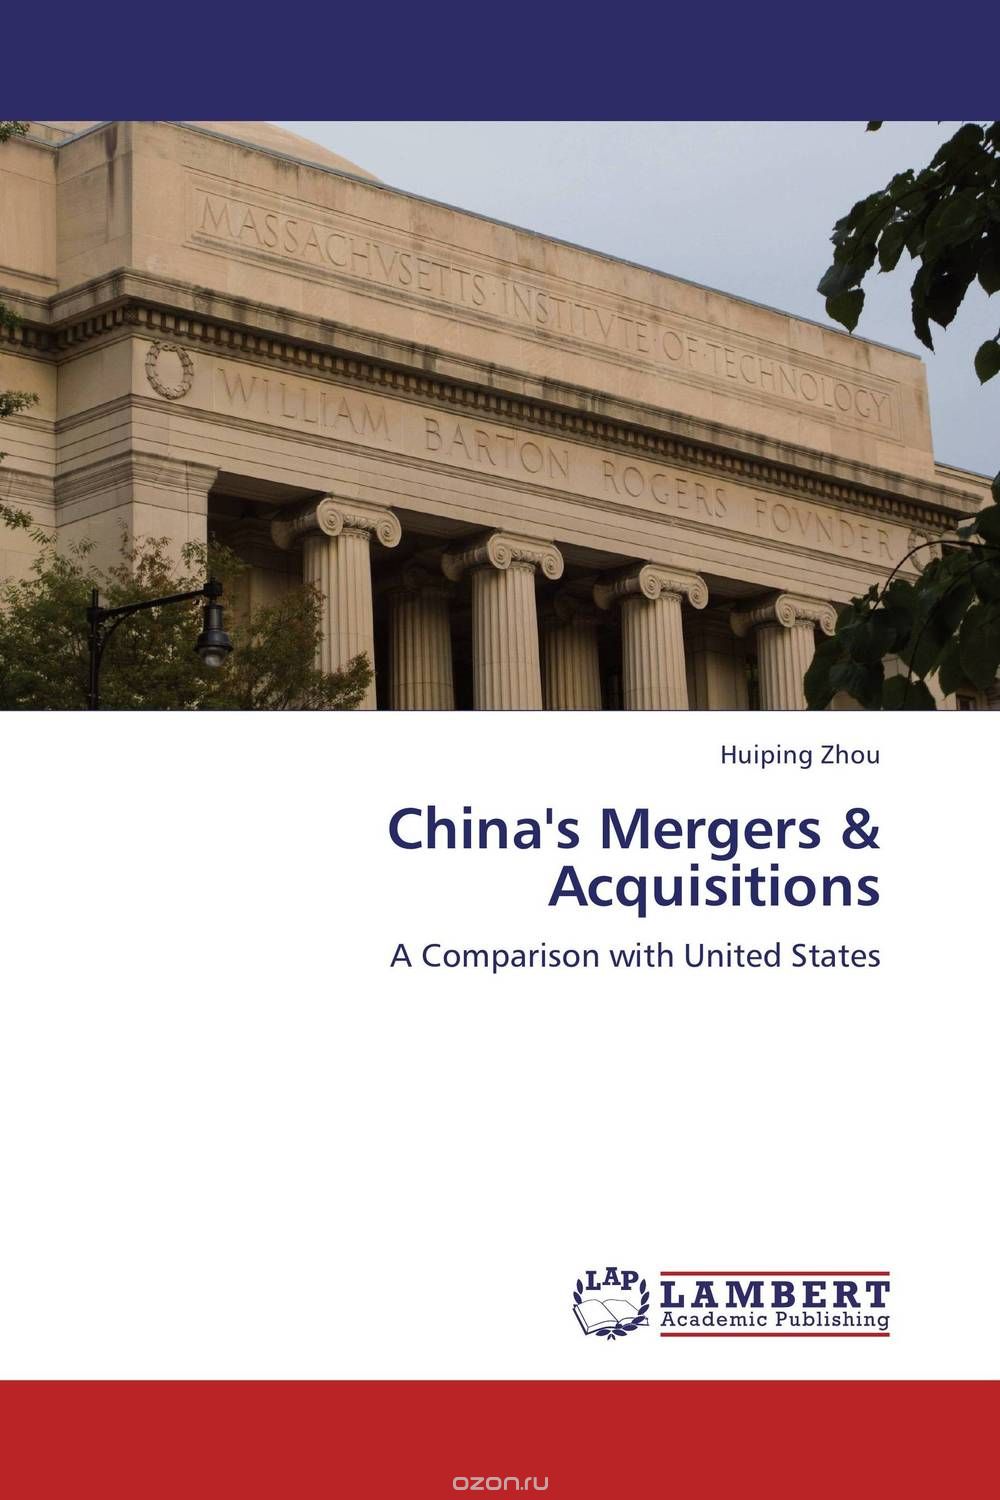 Скачать книгу "China's Mergers & Acquisitions"